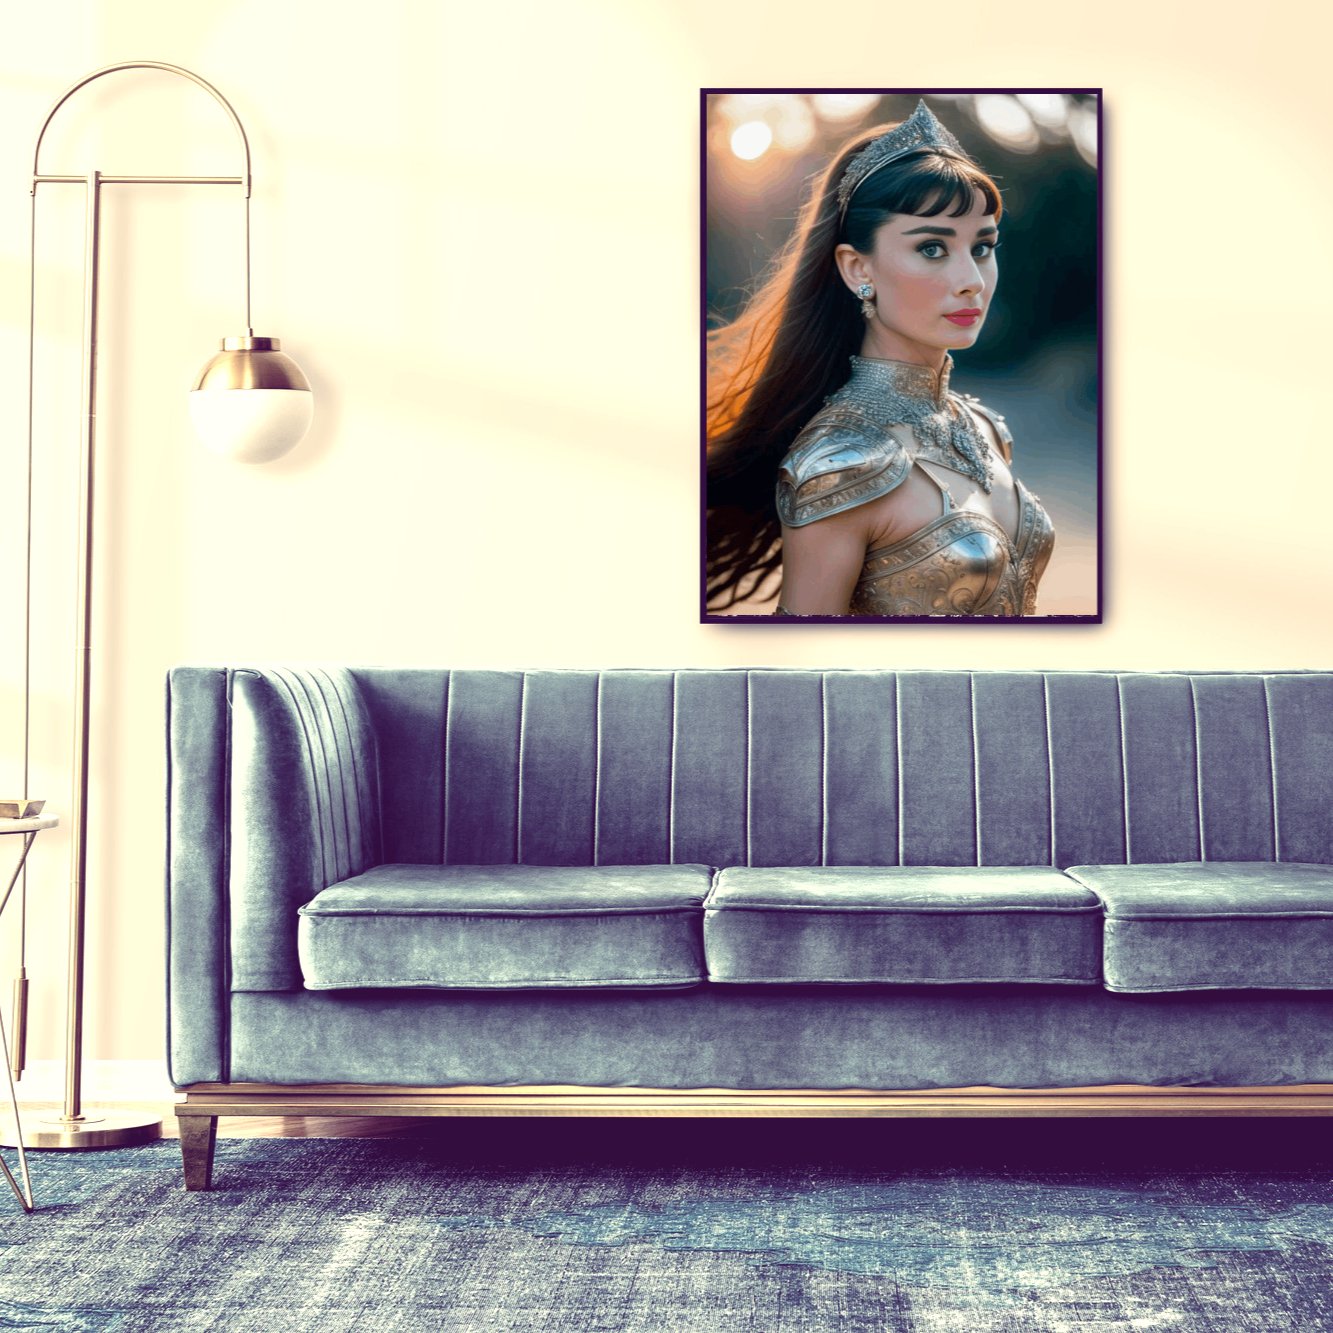 Digital Print: Silveria's Radiance: Audrey Hepburn - The Knight of Elegance and Valor, Digital Audrey, Print Art, Fantasy Art, Hollywood, Celebrity, Gift, Decor